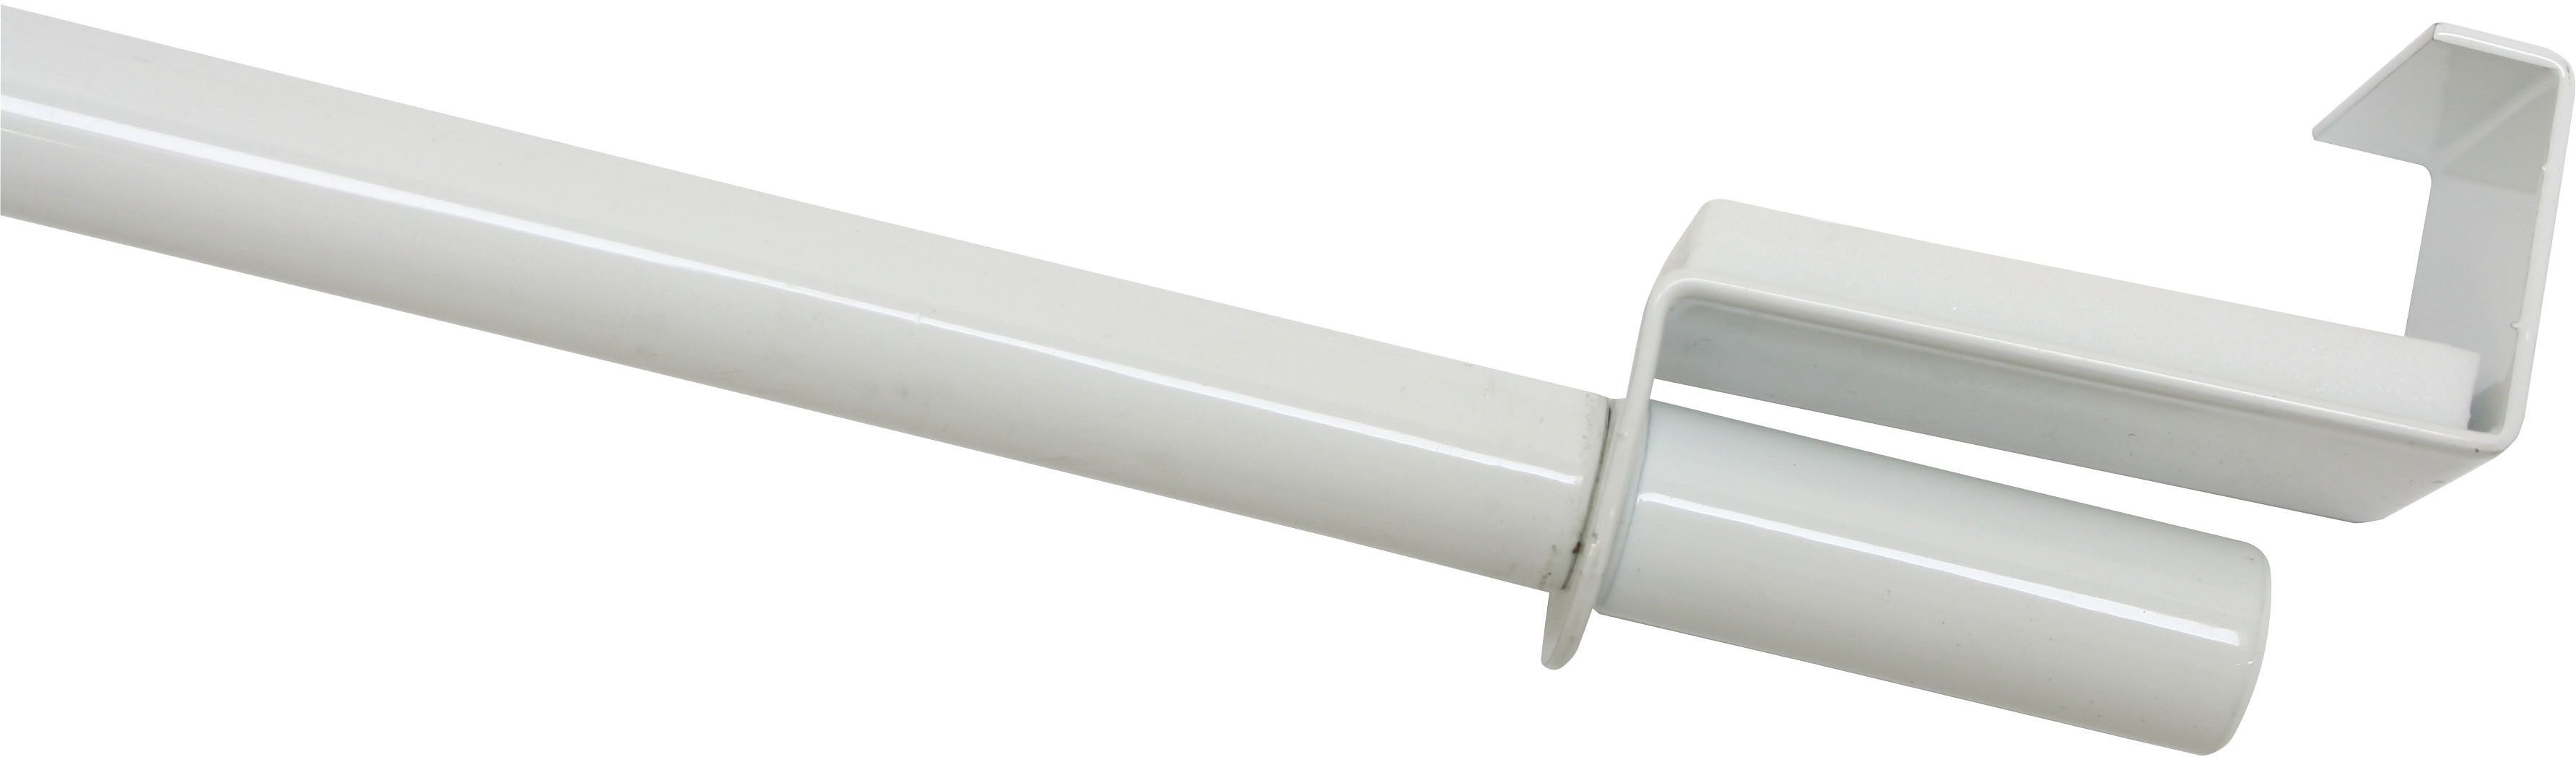 Barre de vitrage sans perçage Presto Basic blanc Ø9 mm x L.60/80 cm